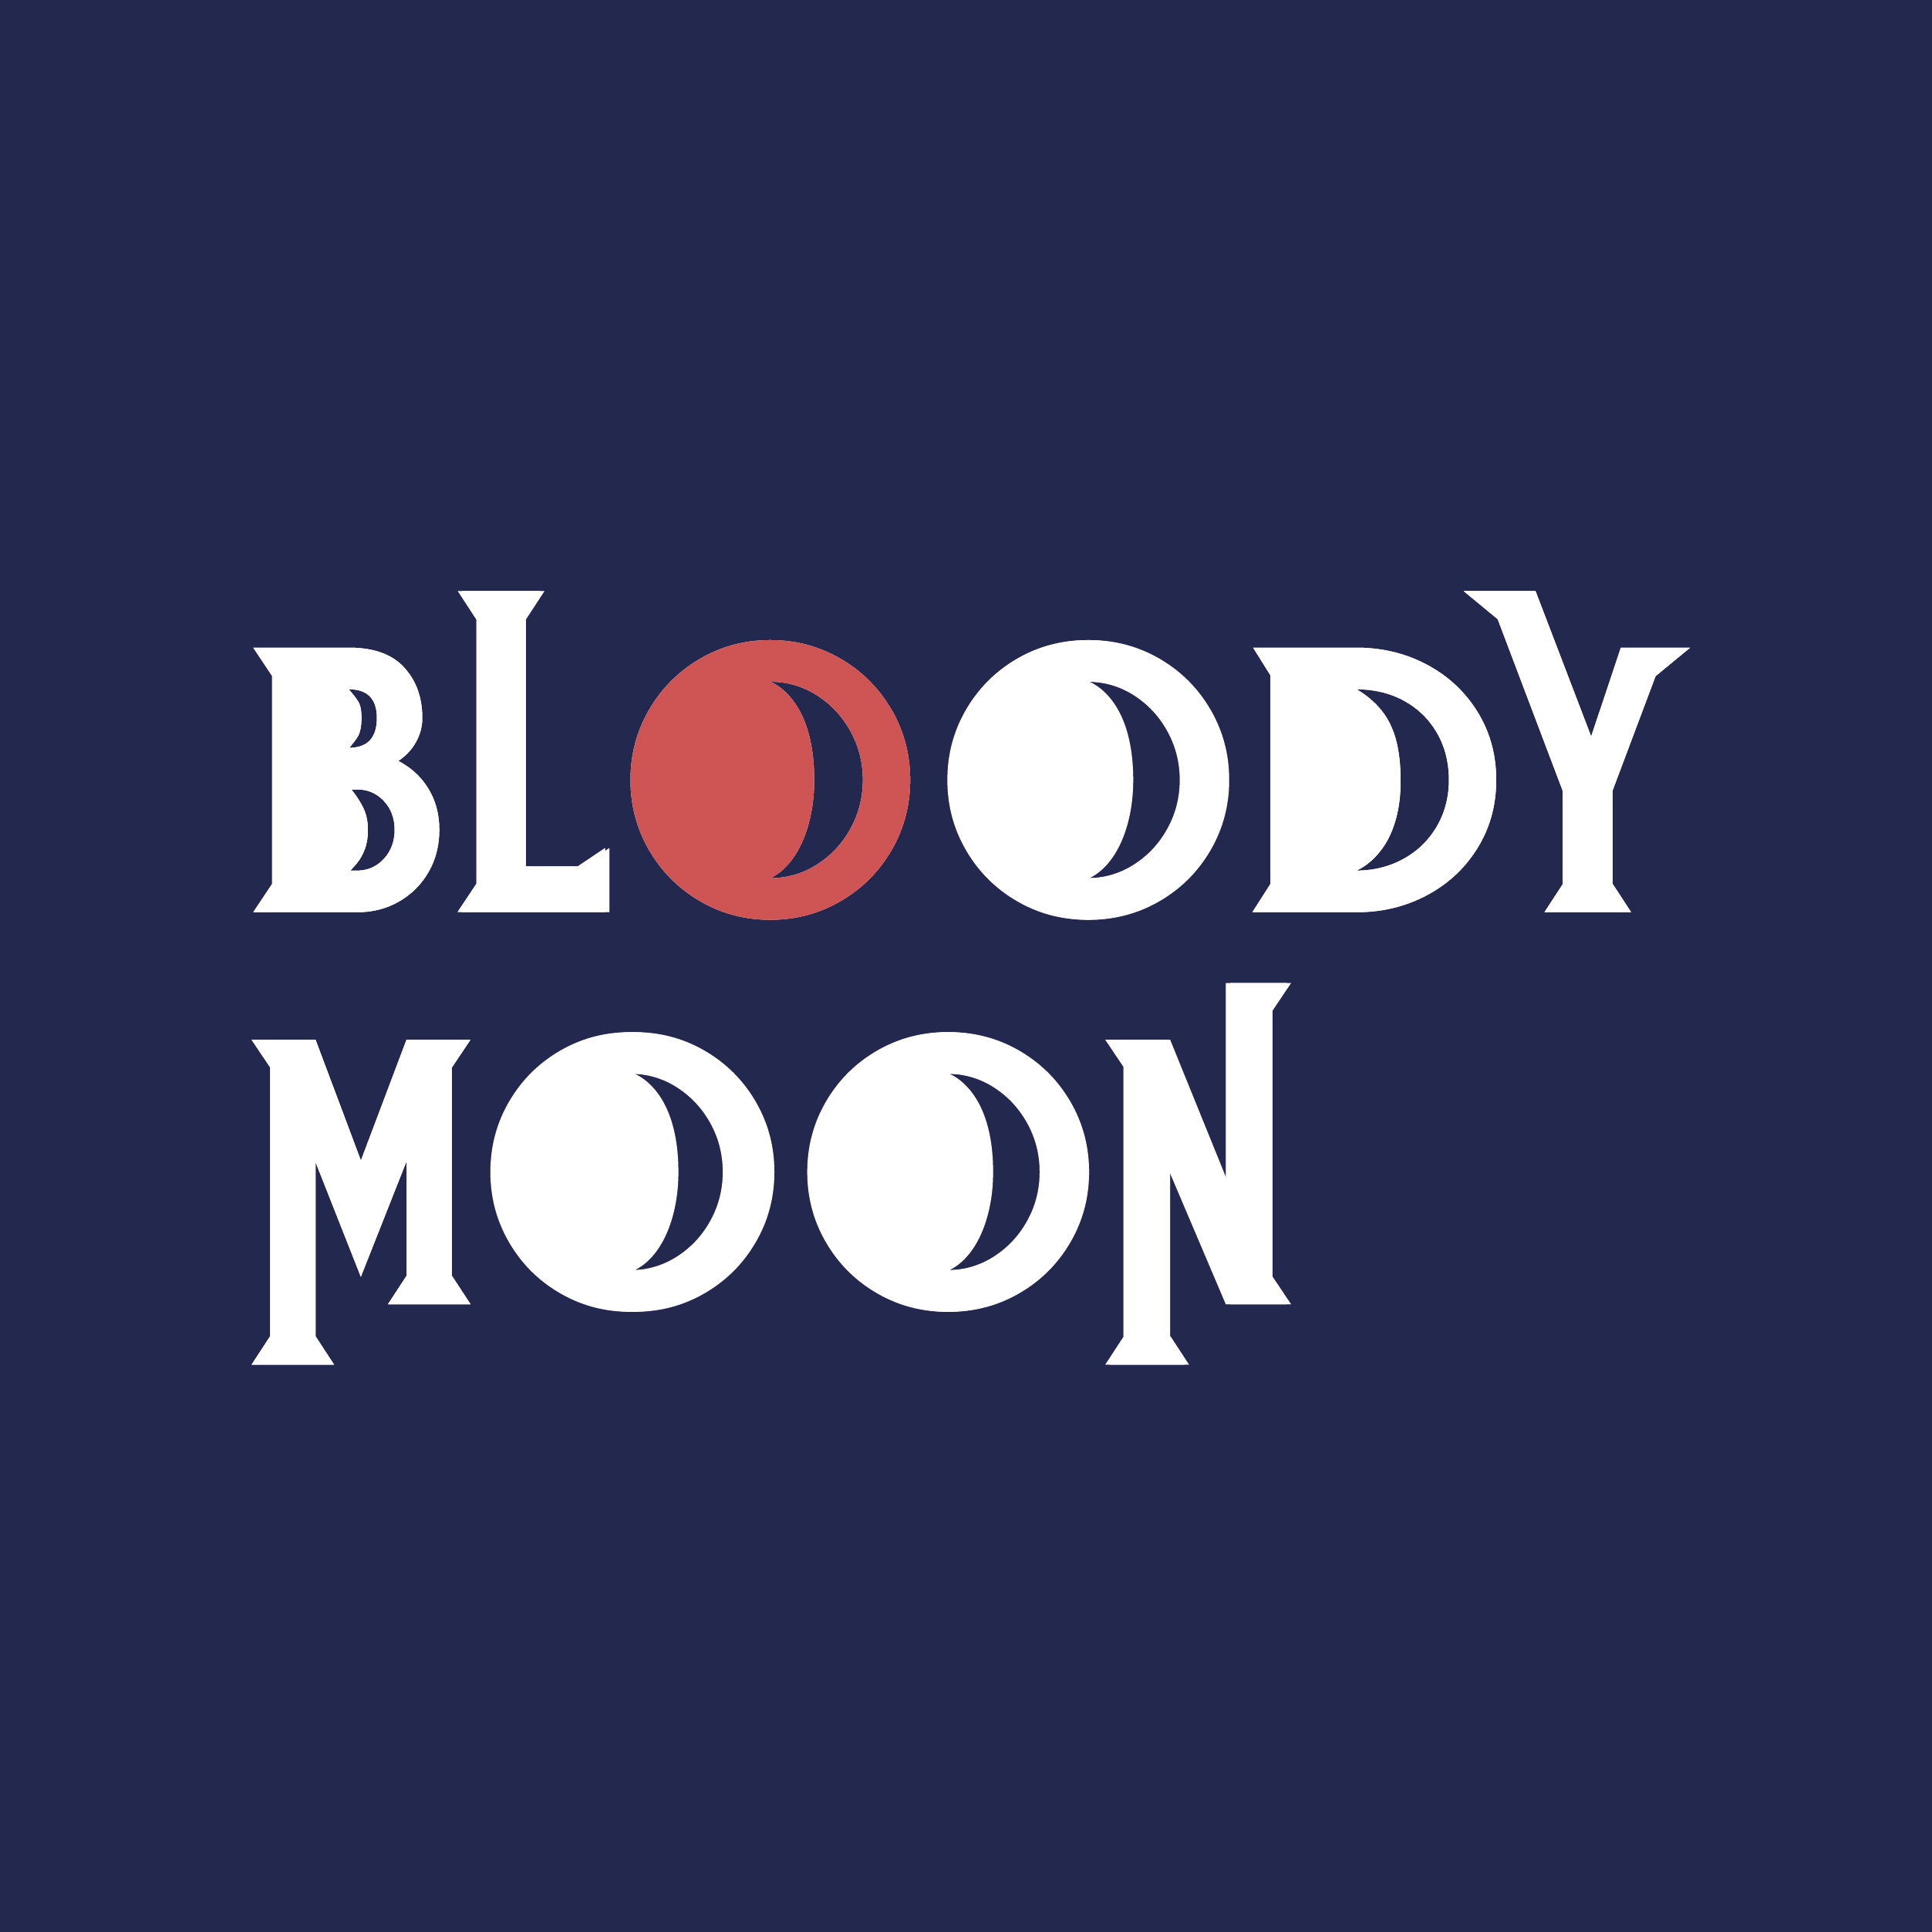 Bloody moon